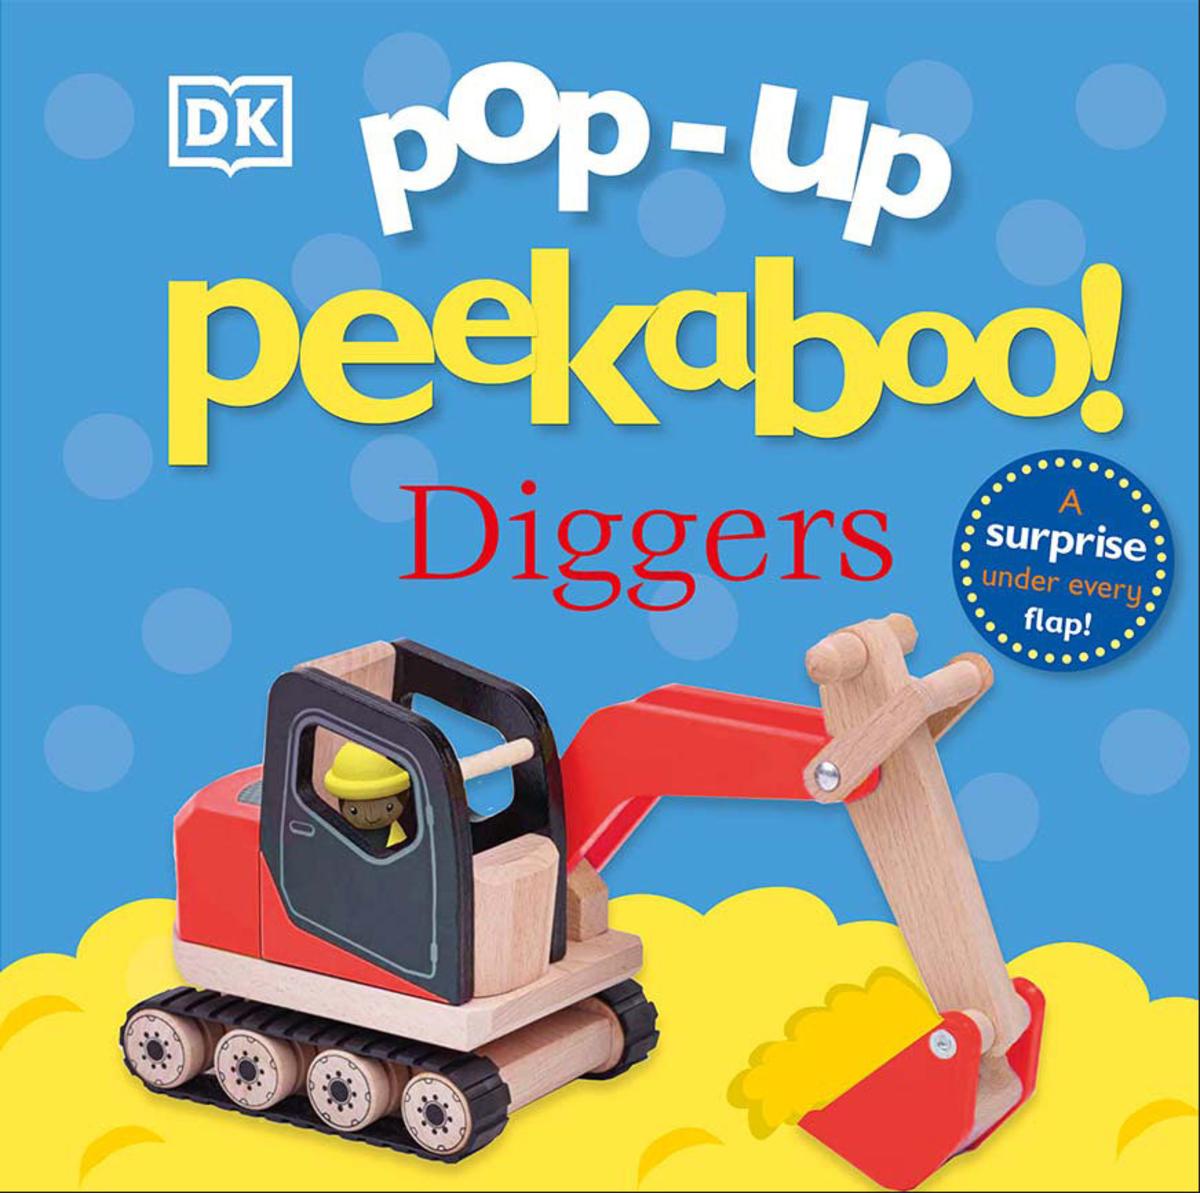 Pop-Up Peekaboo! Diggers - Pop-Up Surprise Under Every Flap!